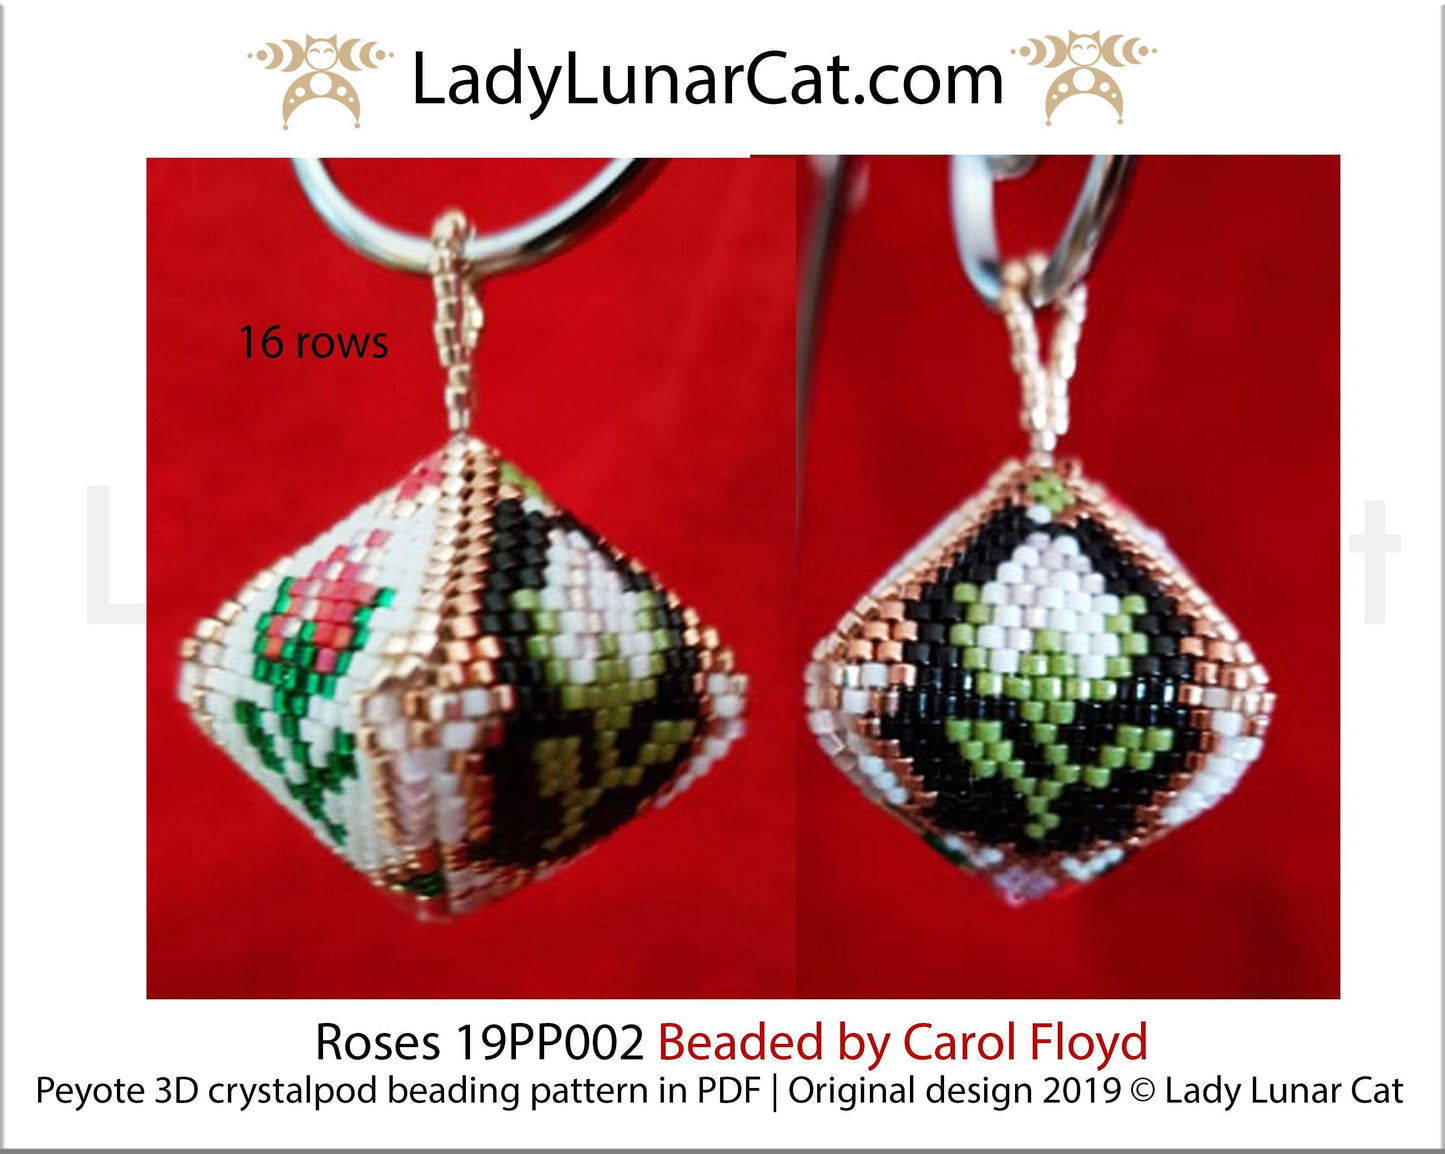 Peyote pod patterns for beading Vintage roses flowers 19PS002 LadyLunarCat